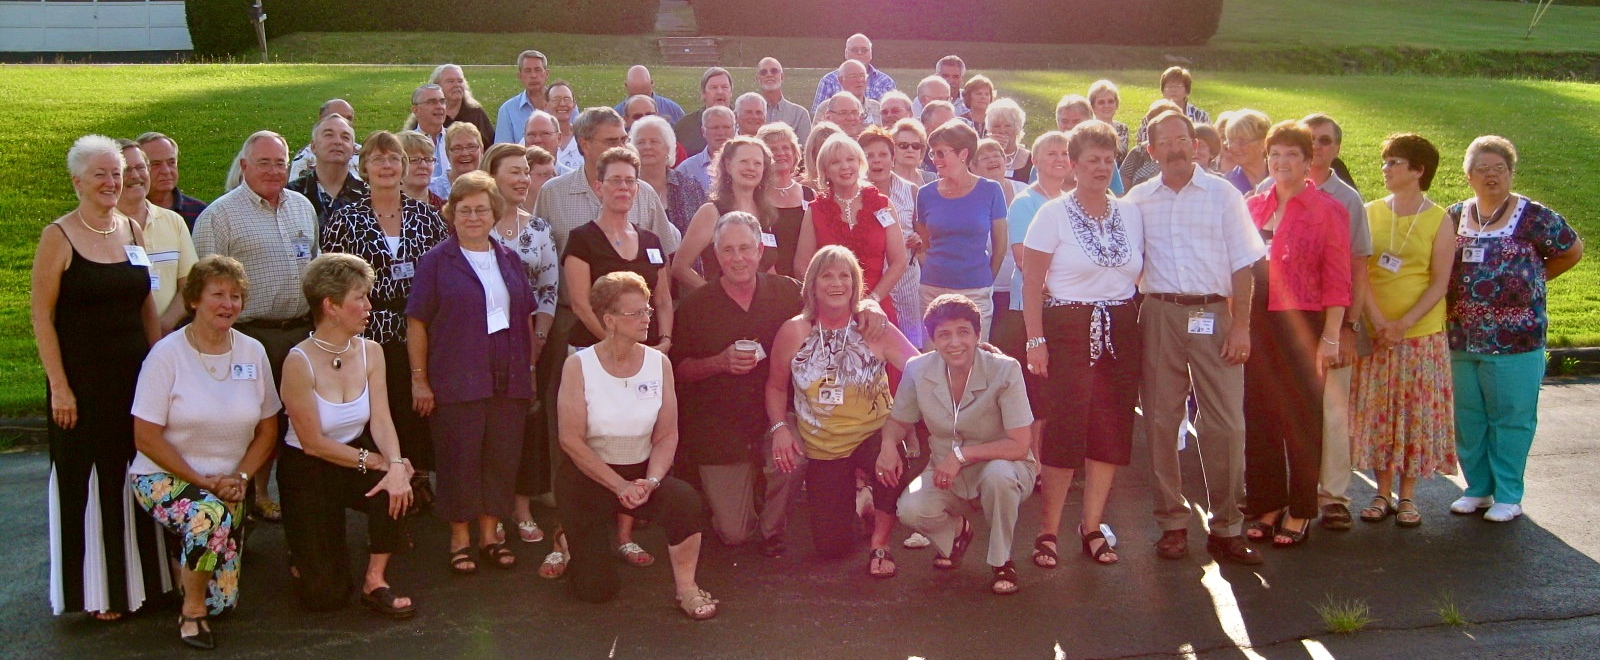 BAHS 45th Class Reunion, July 2010,
Masonic Temple, Bradford, PA